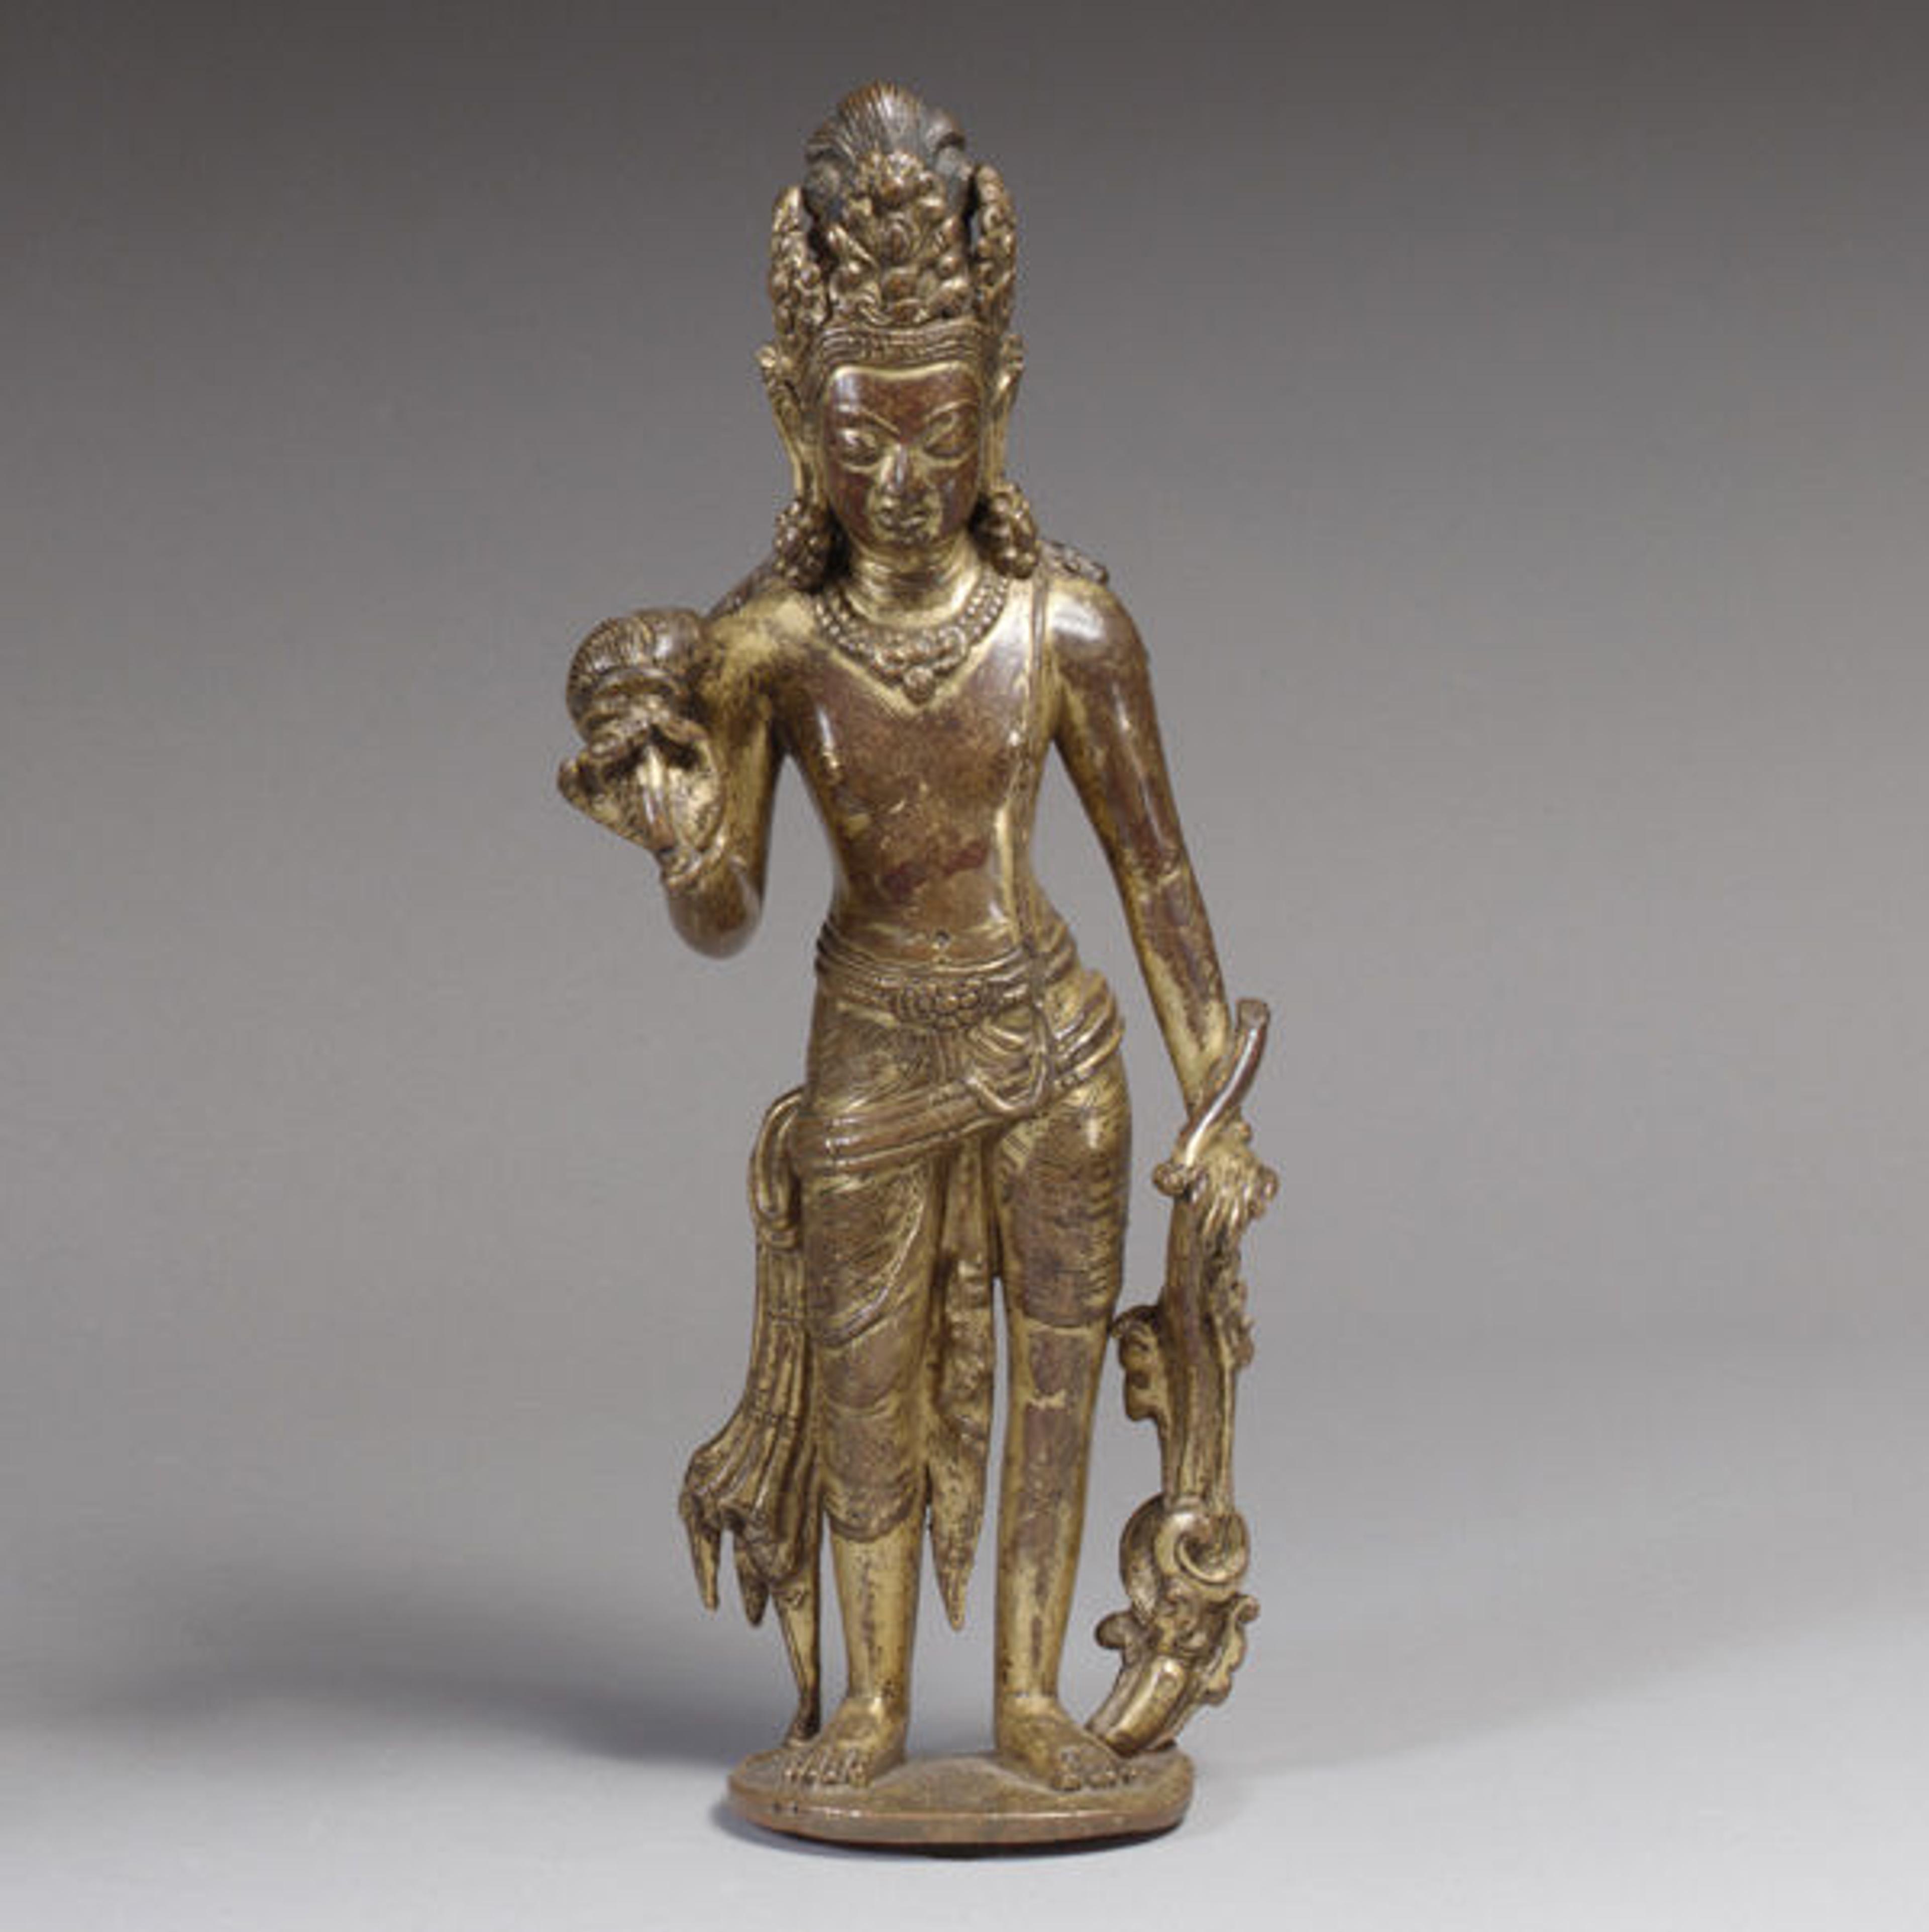 Bodhisattva, Probably Padmapani Lokeshvara, 10th–11th century. Nepal (Kathmandu Valley), Licchavi–Thakuri periods. Gilt copper alloy; H. 11 7/8 in. (30.2 cm). The Metropolitan Museum of Art, New York, Gift of Margery and Harry Kahn, 1981 (1981.59)